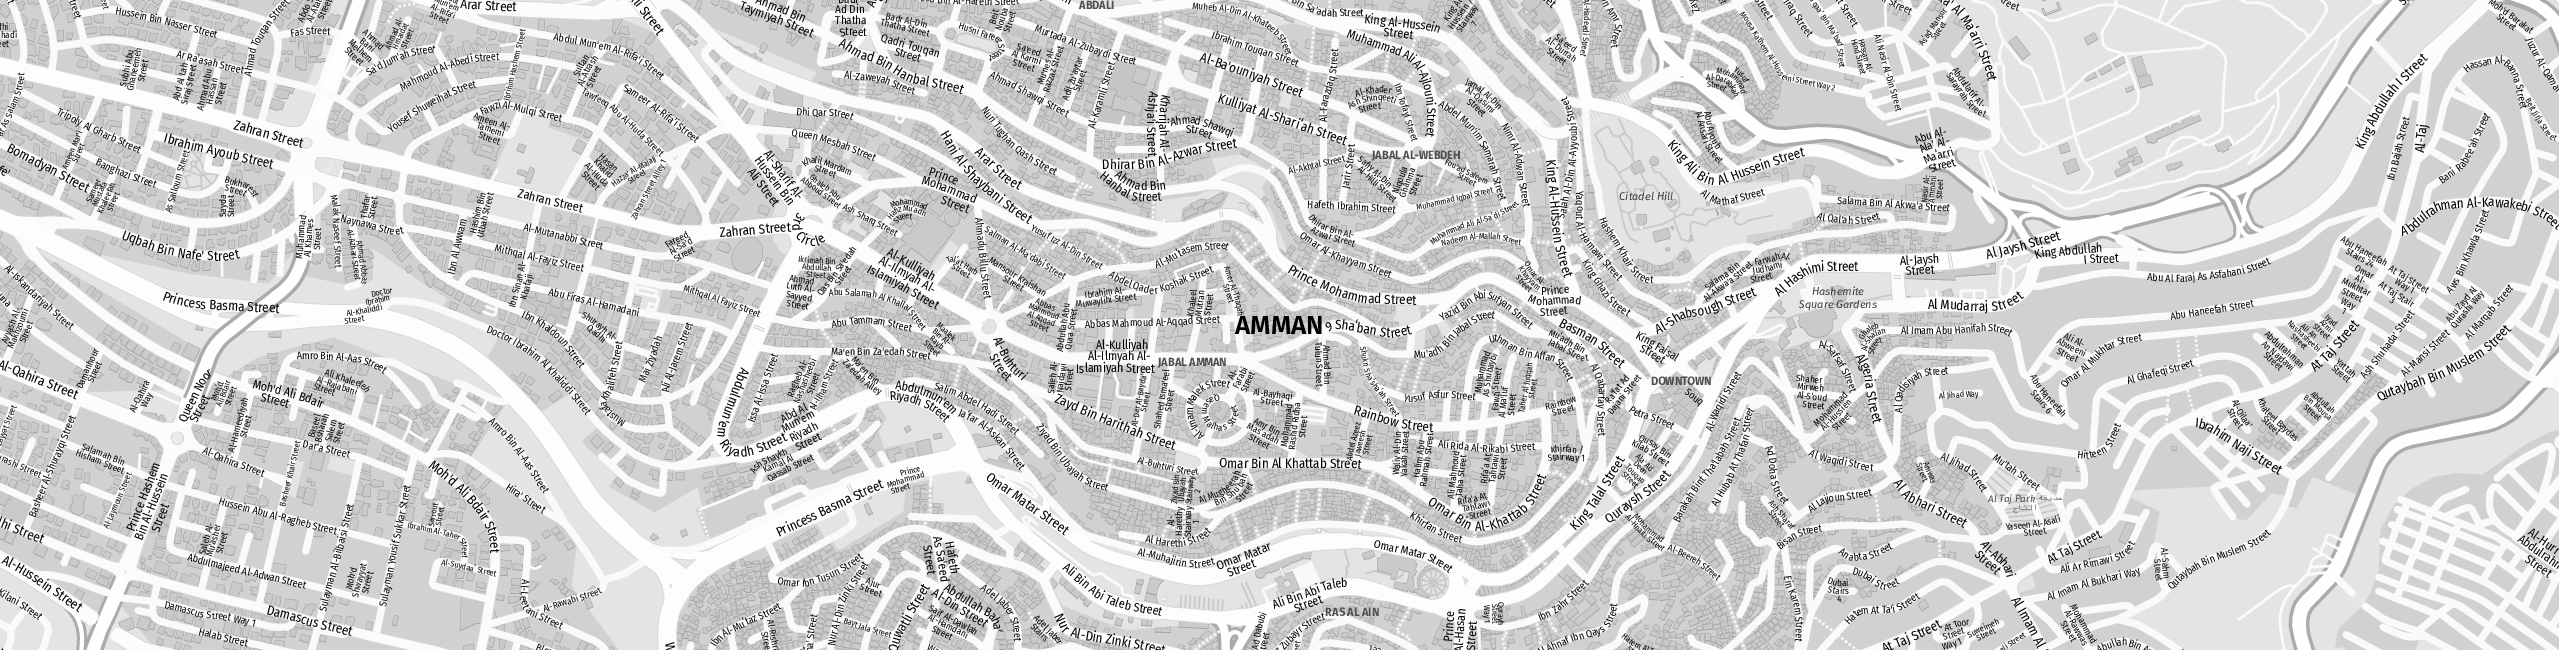 Stadtplan Amman zum Downloaden.